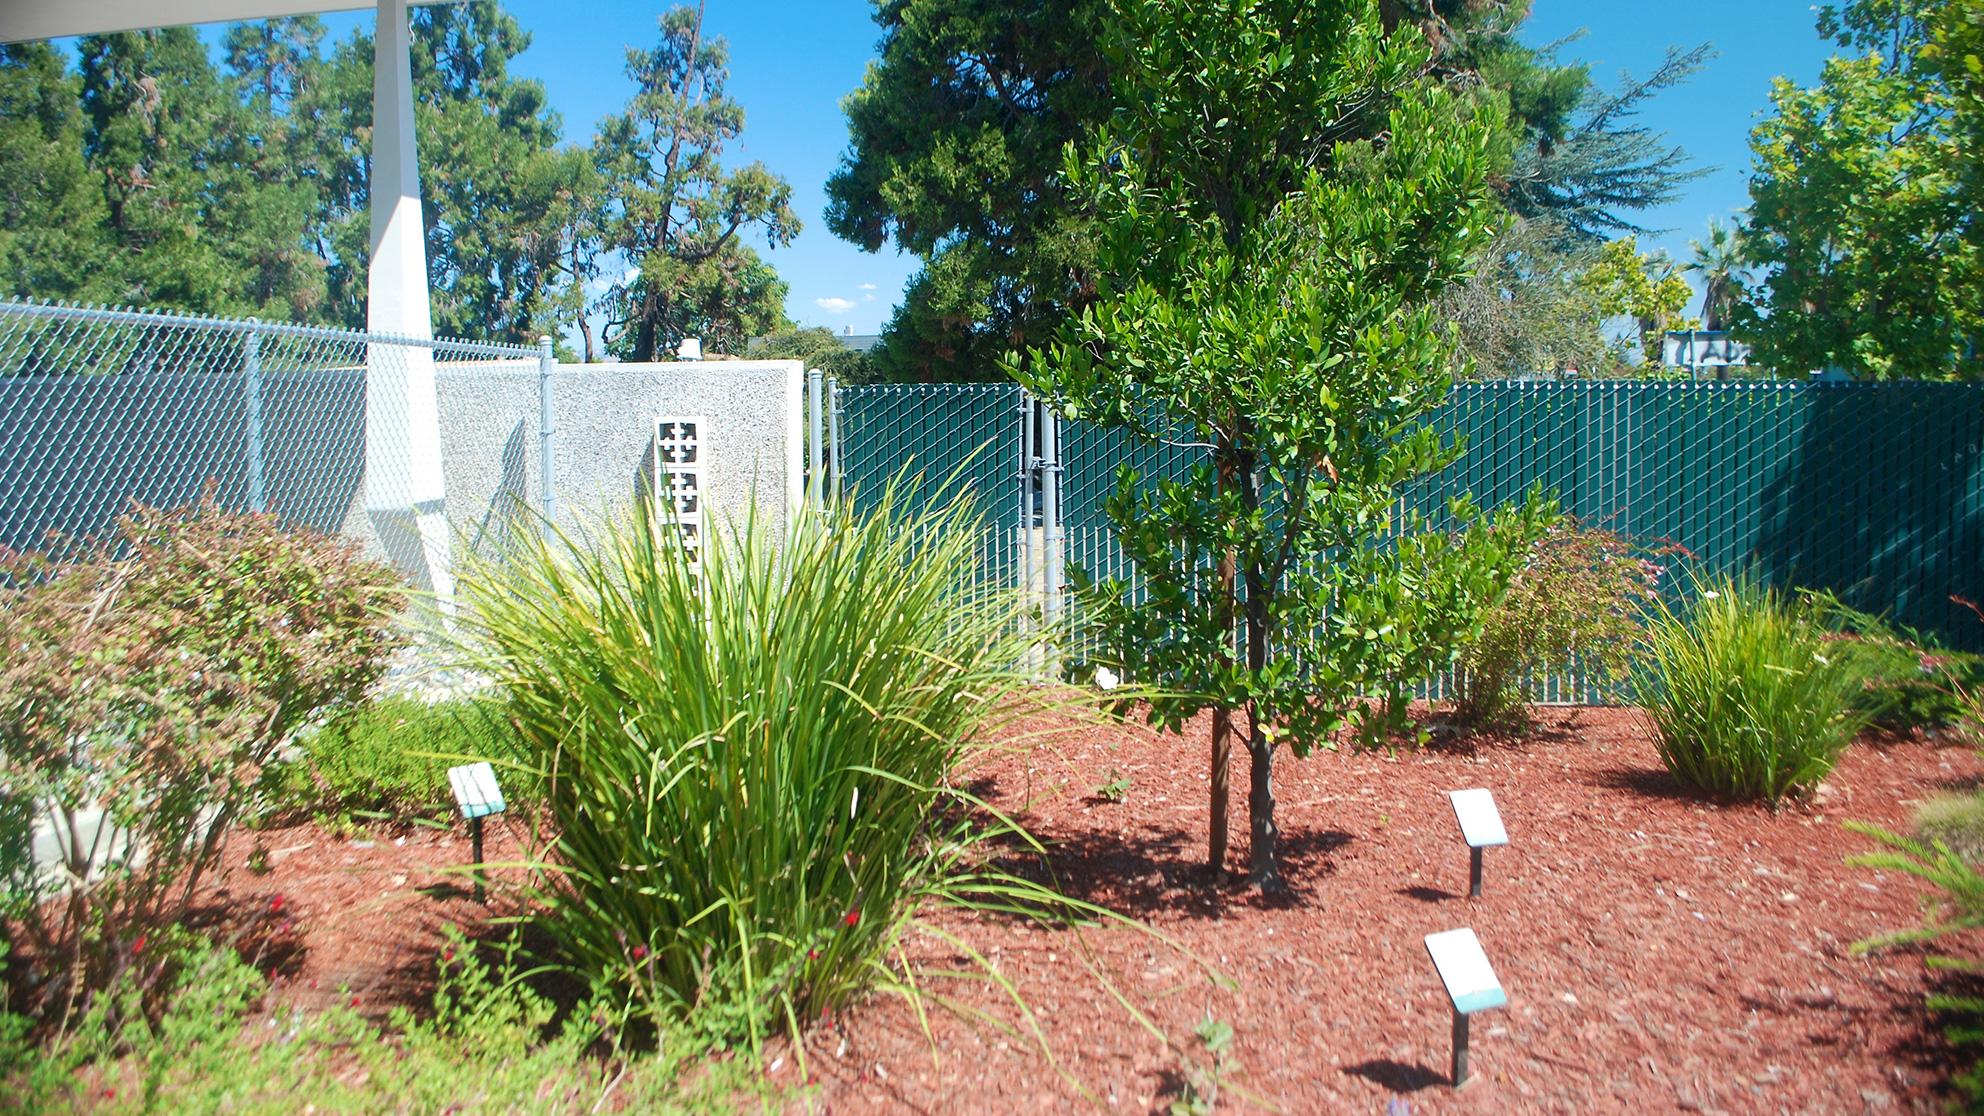 Image of the San Jose Water demonstration garden